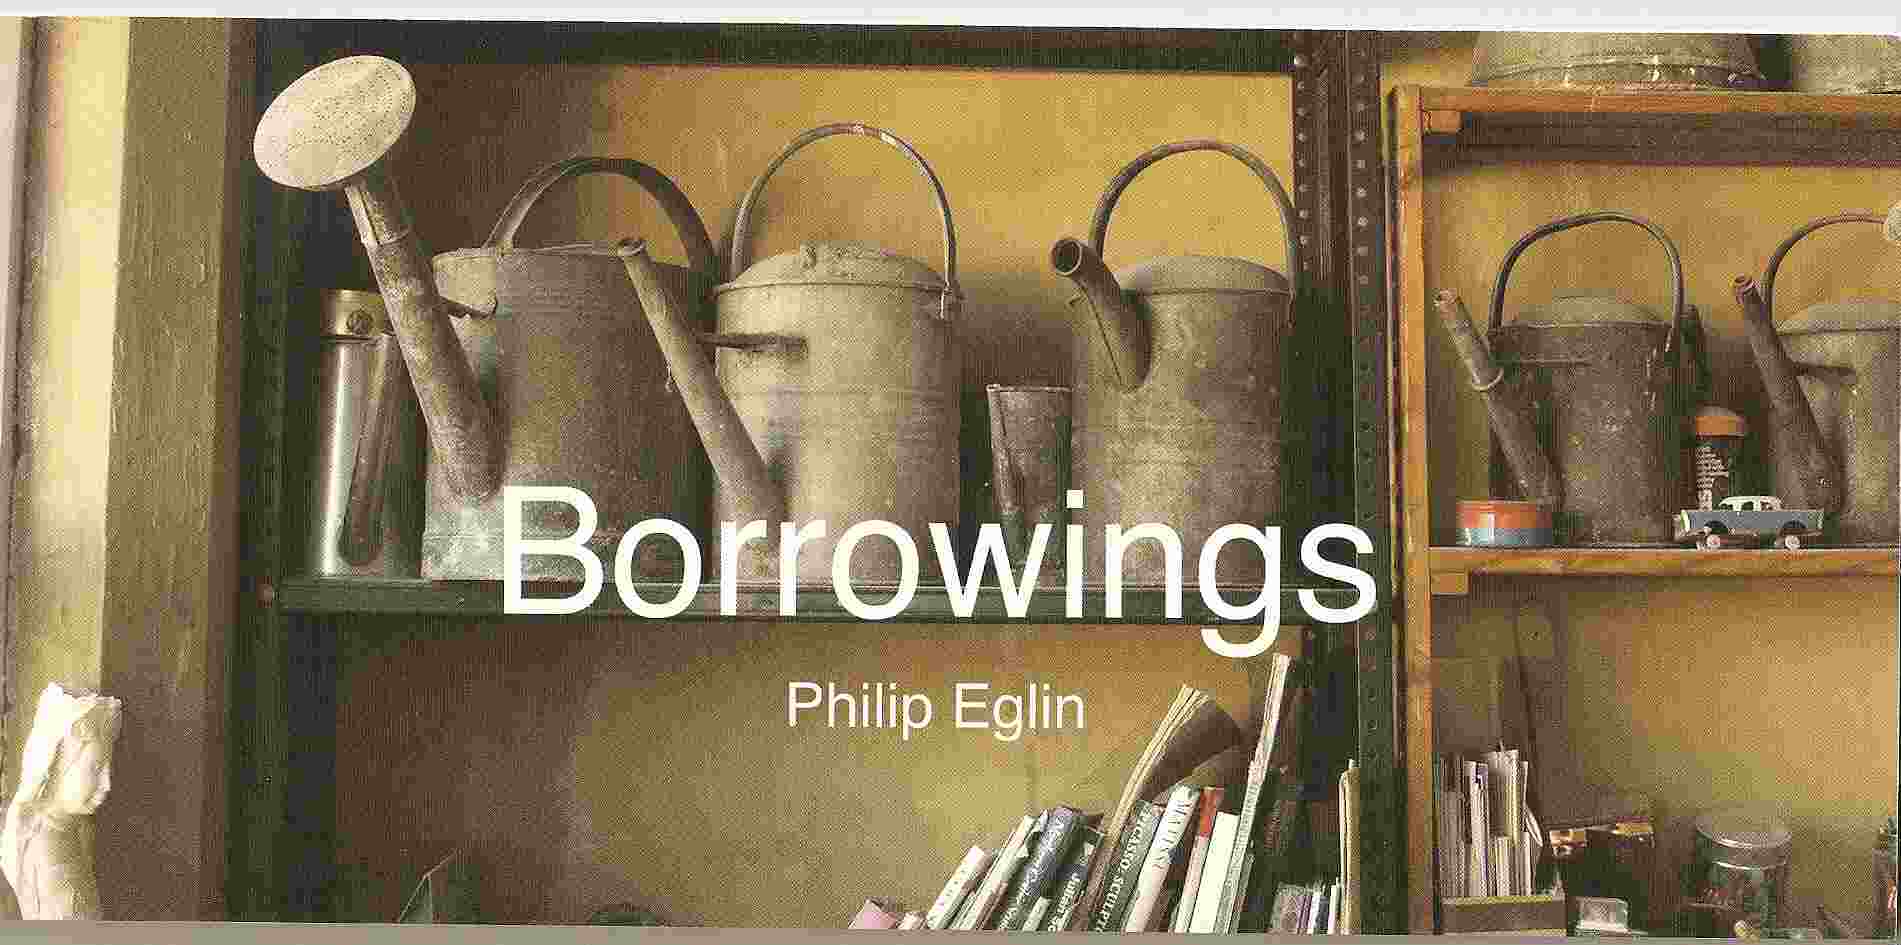 Image for BORROWINGS - PHILIP EGLIN